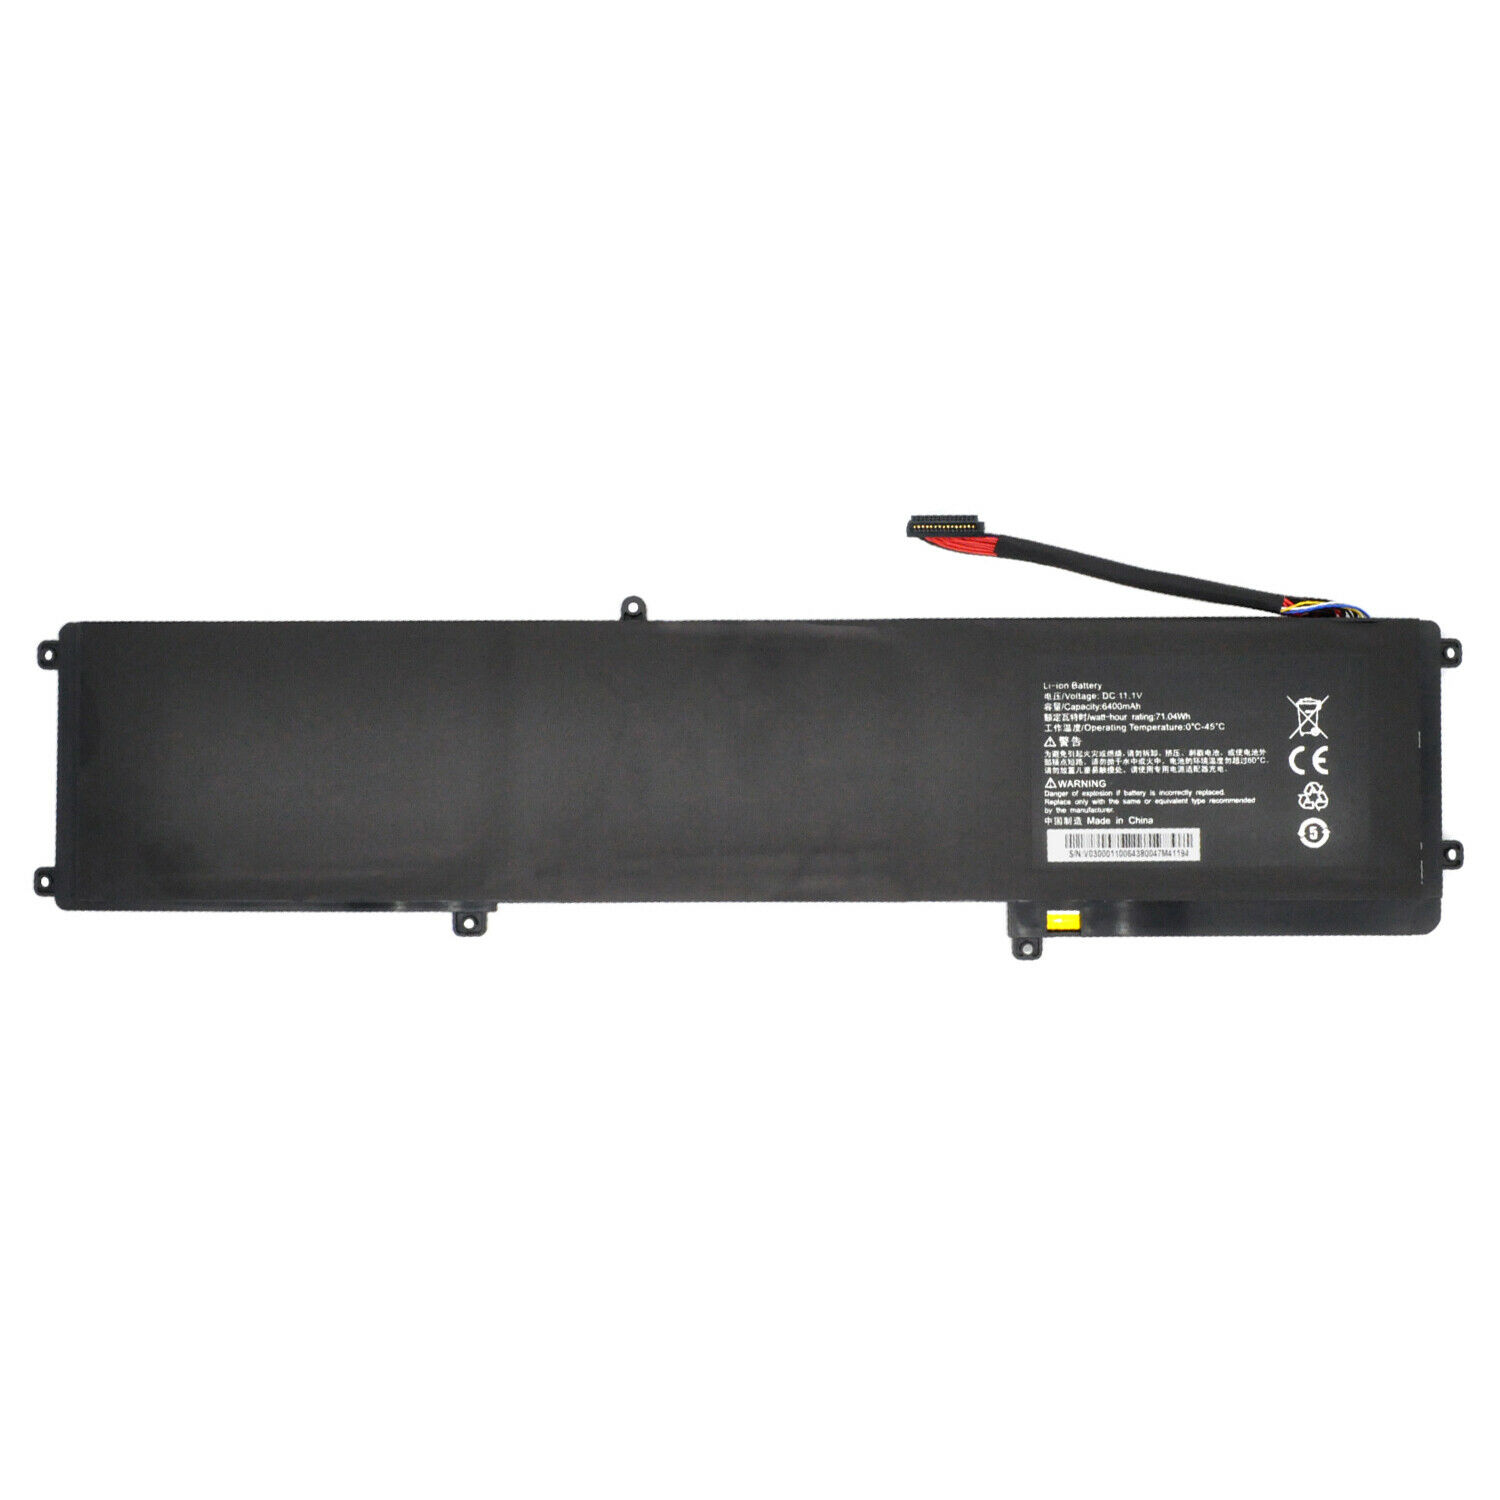 Batterie pour Razer Blade RZ09-01302E22 RZ09-0102 RZ09-01161 RZ09-01301E41(compatible)